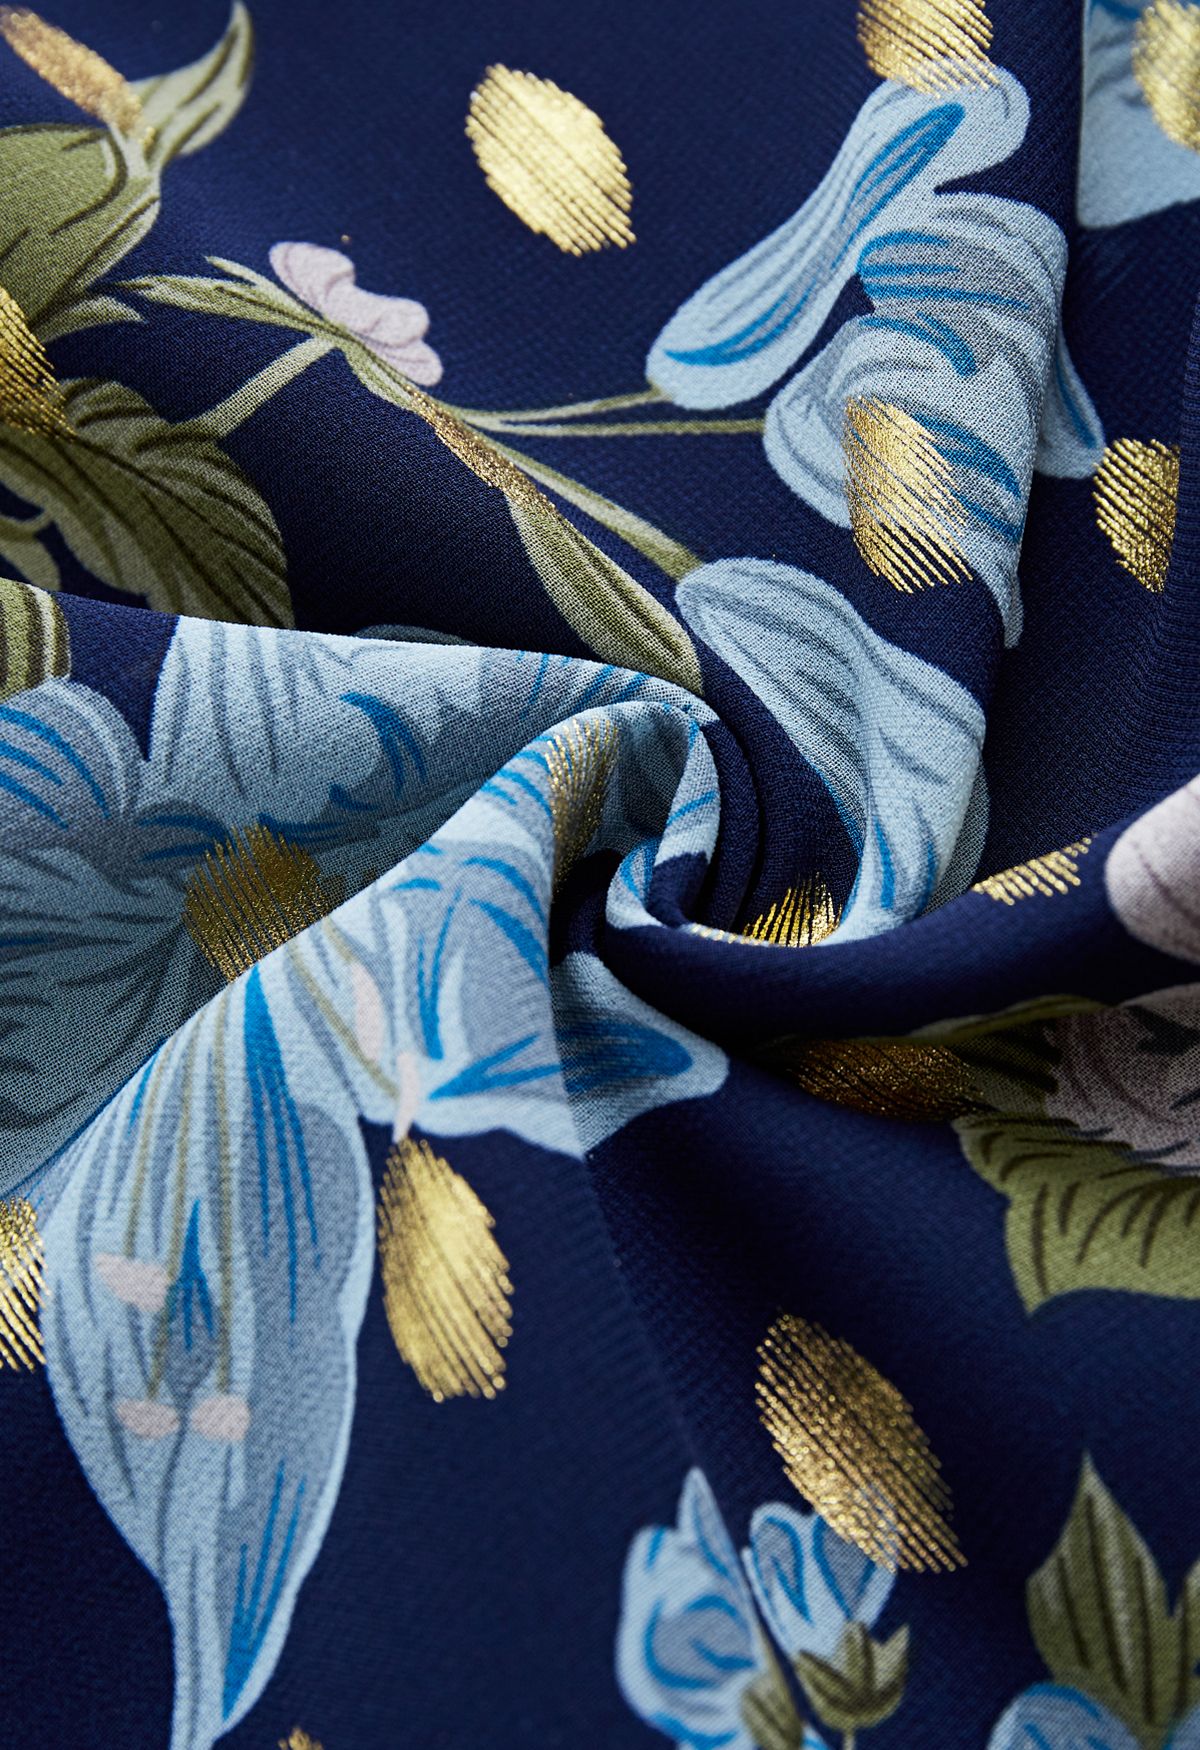 Robe mi-longue Floral to See avec pois dorés en bleu marine